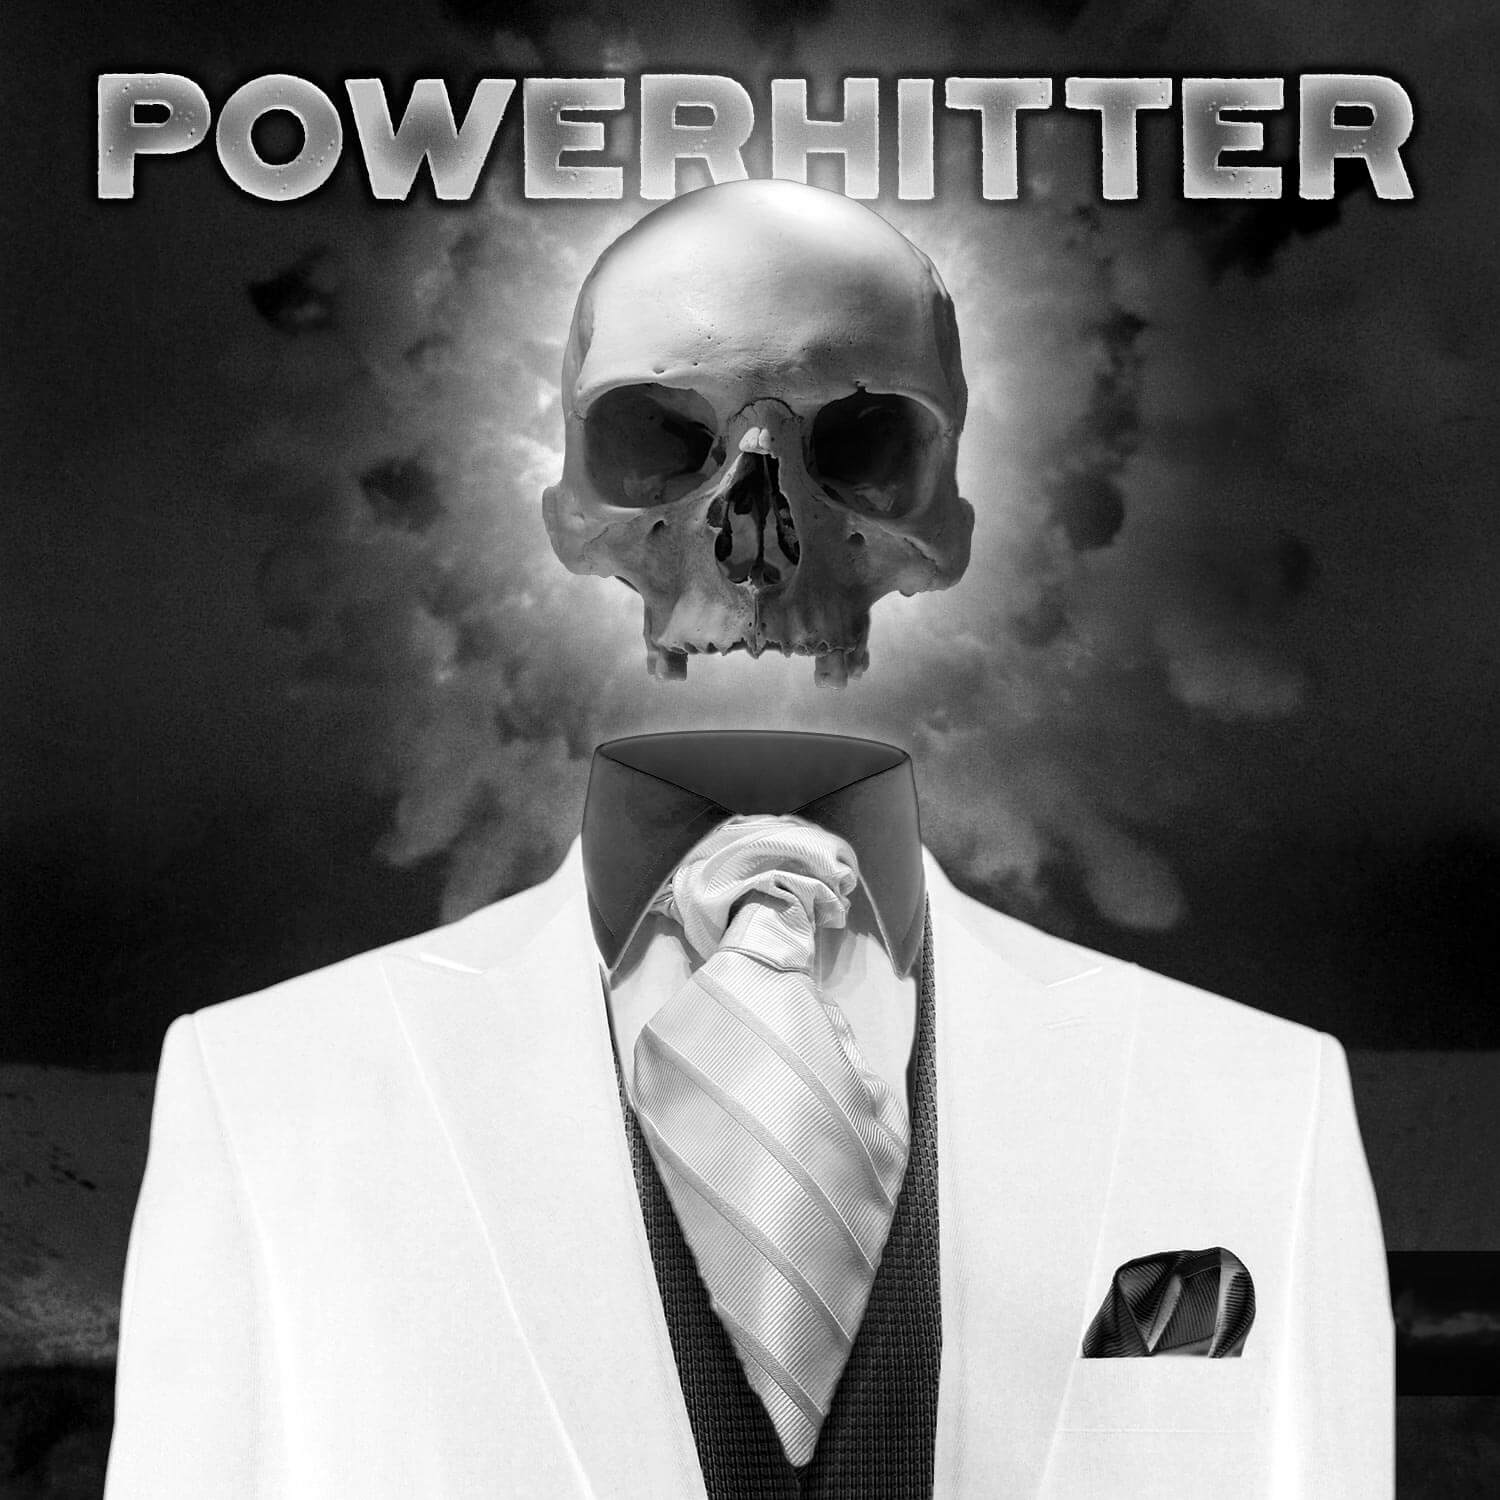 Powerhitter debut album cover concept